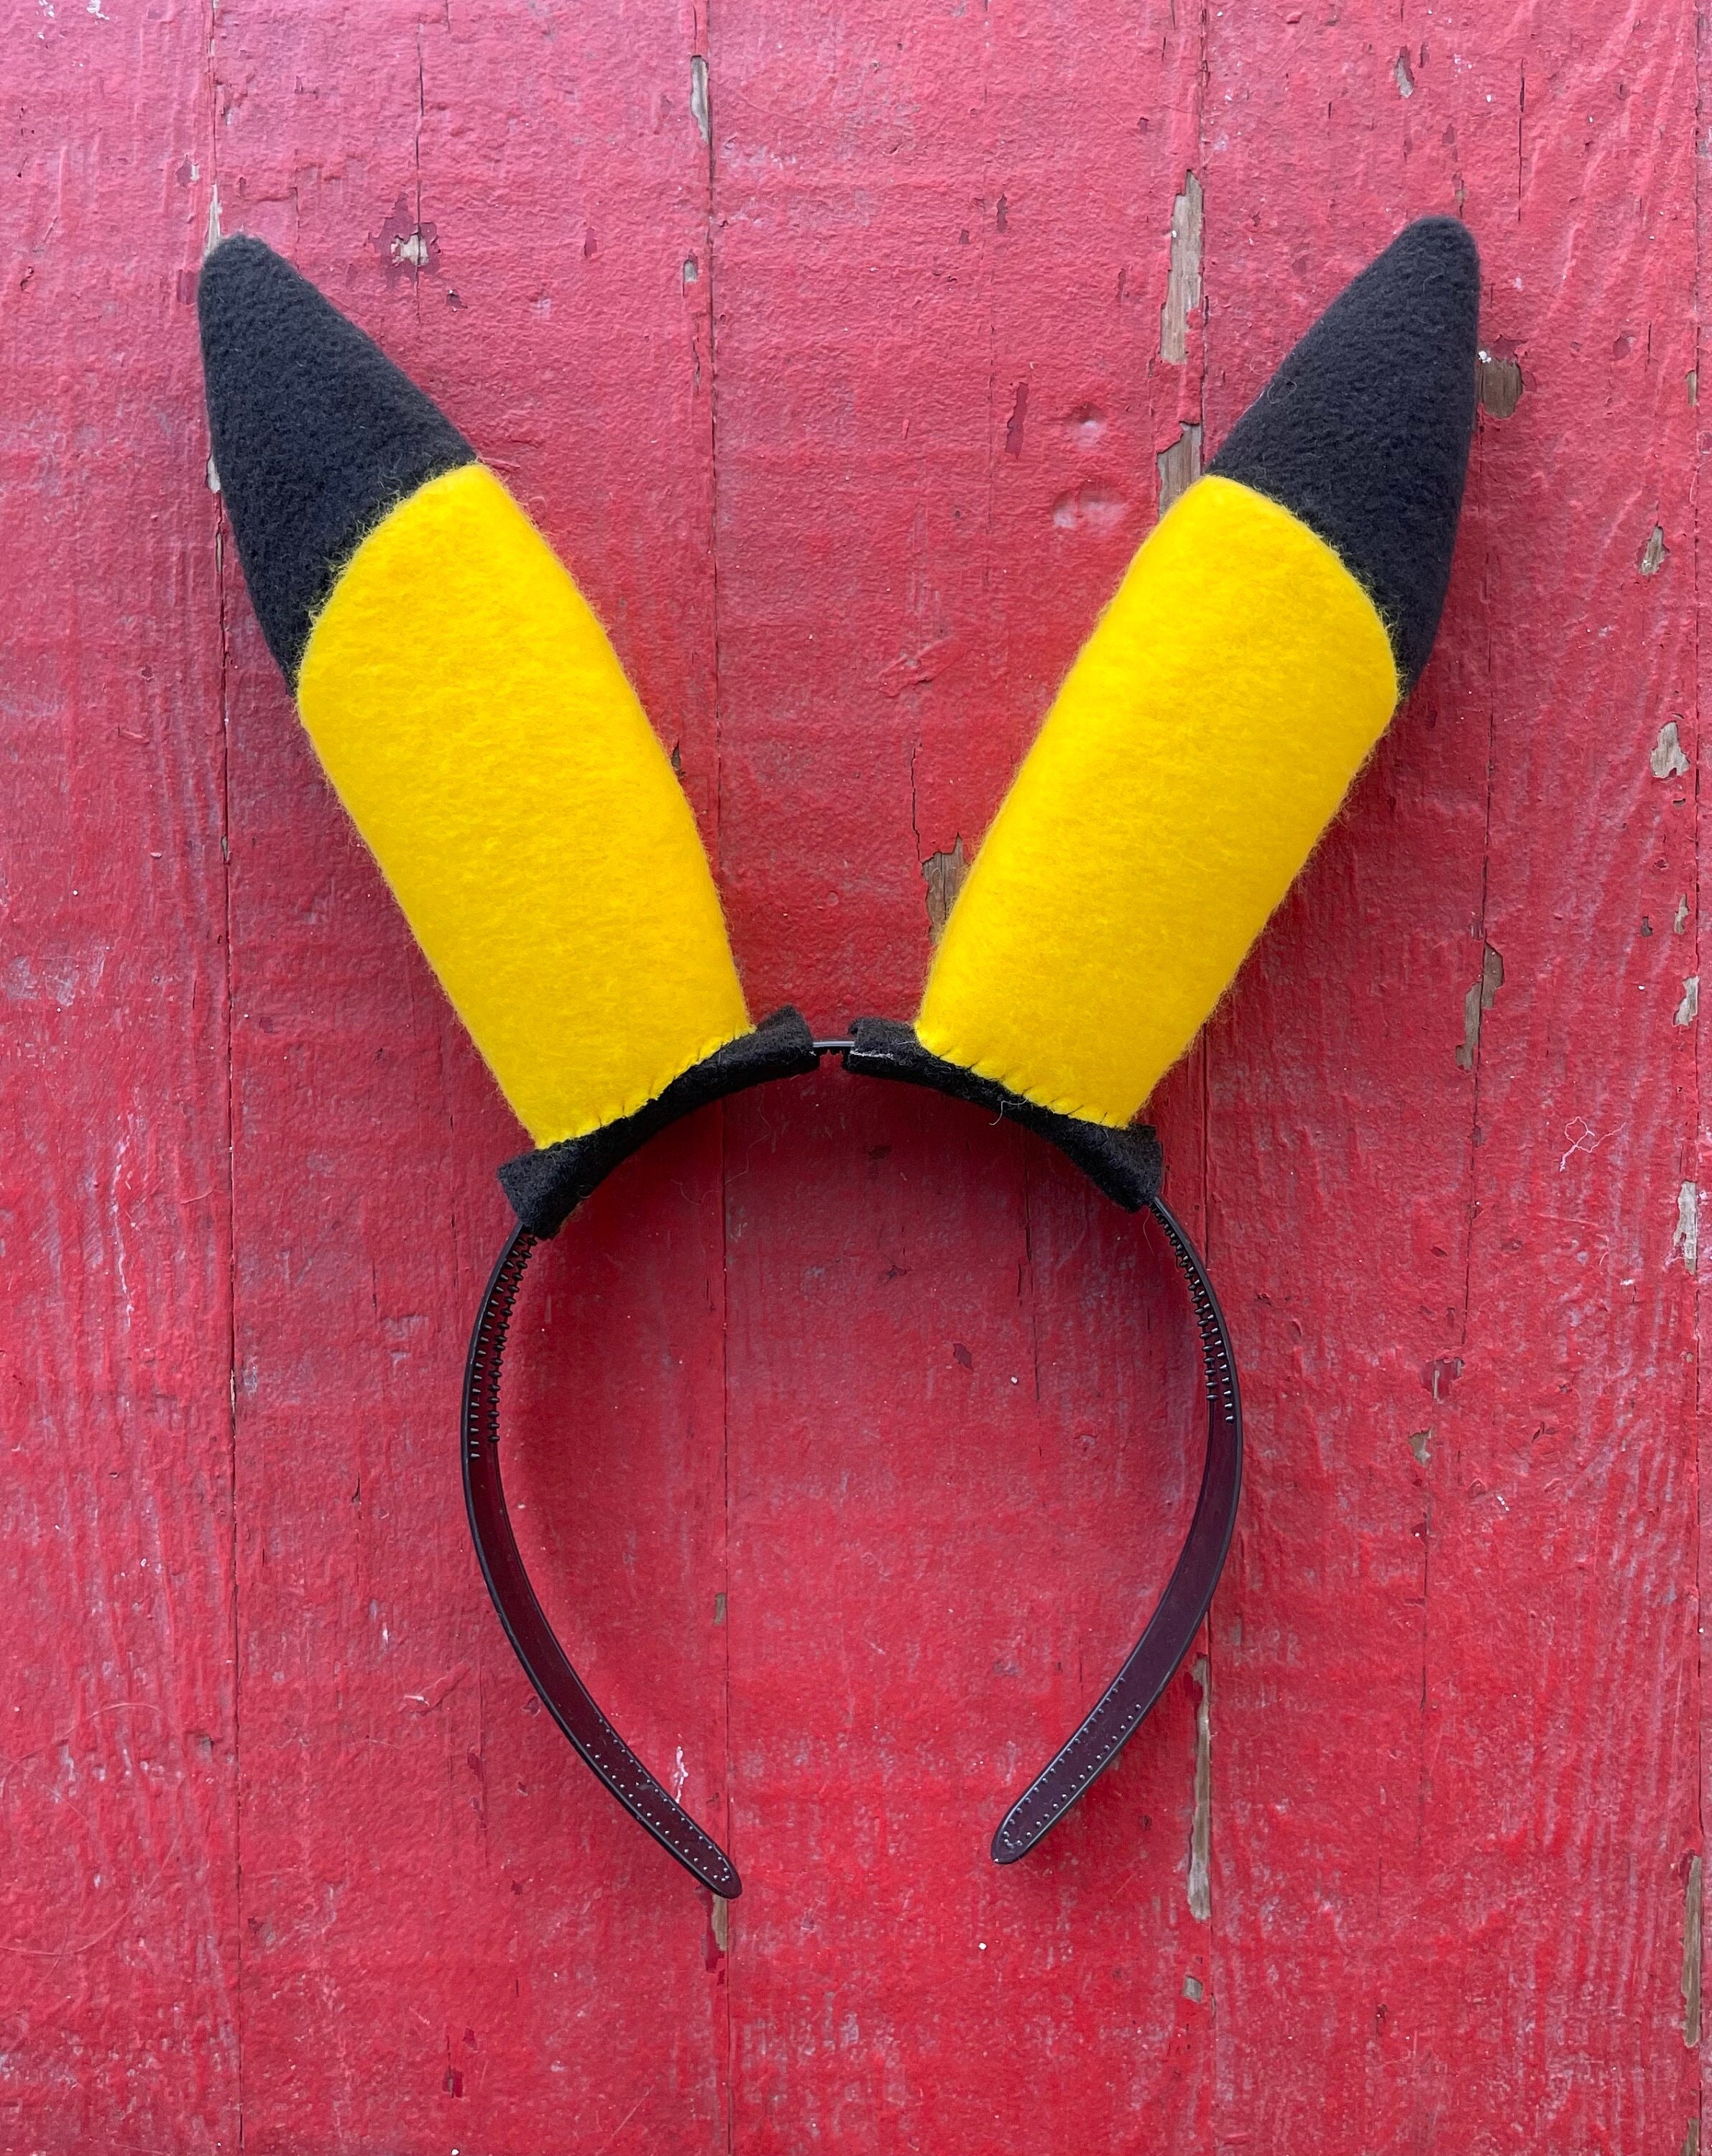 Pikachu ears